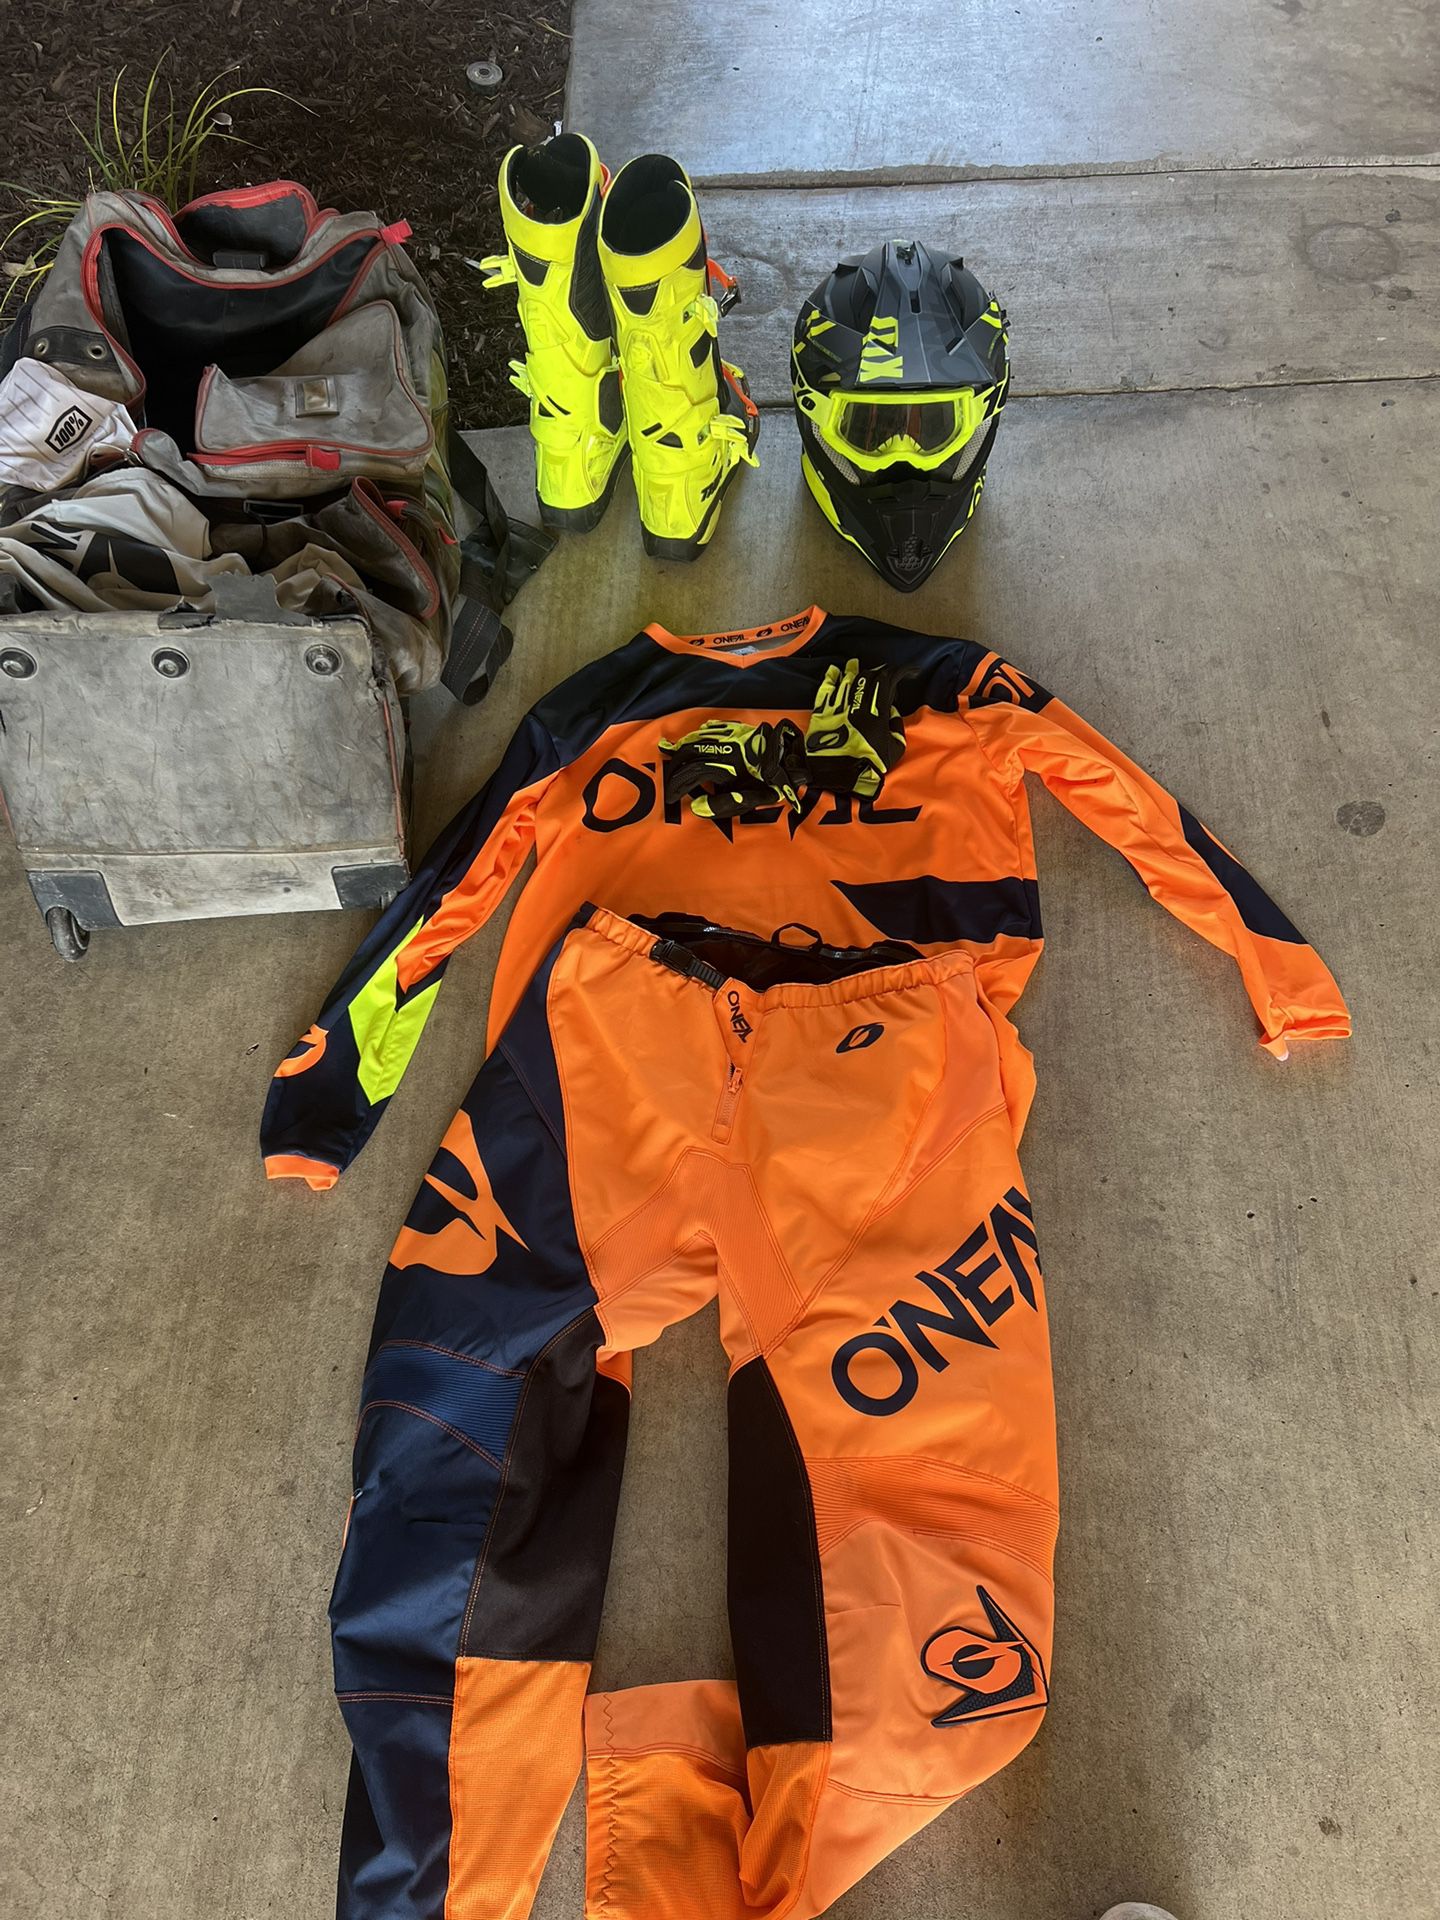 Motocross Gear Helmet, And Boots